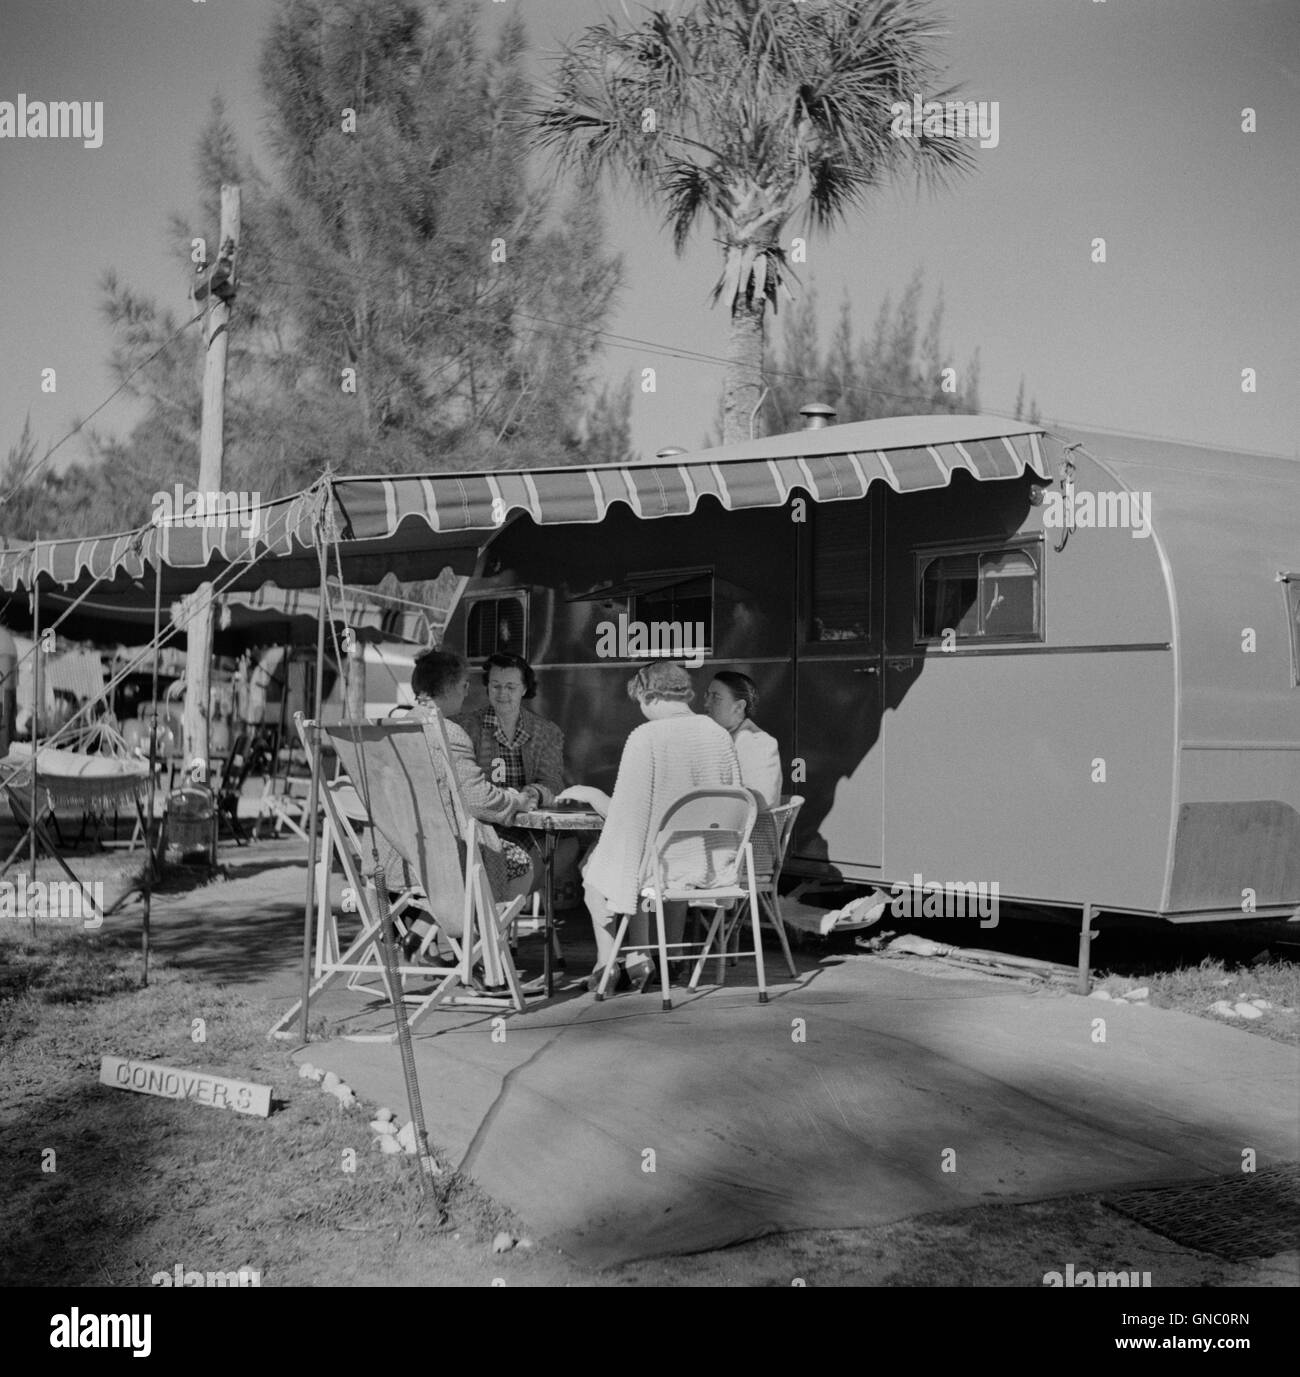 Donne che giocano carte su Porch of Trailer Home, Sarasota, Florida, USA, Marion Post Wolcott, STATI UNITI Farm Security Administration, gennaio 1941 Foto Stock